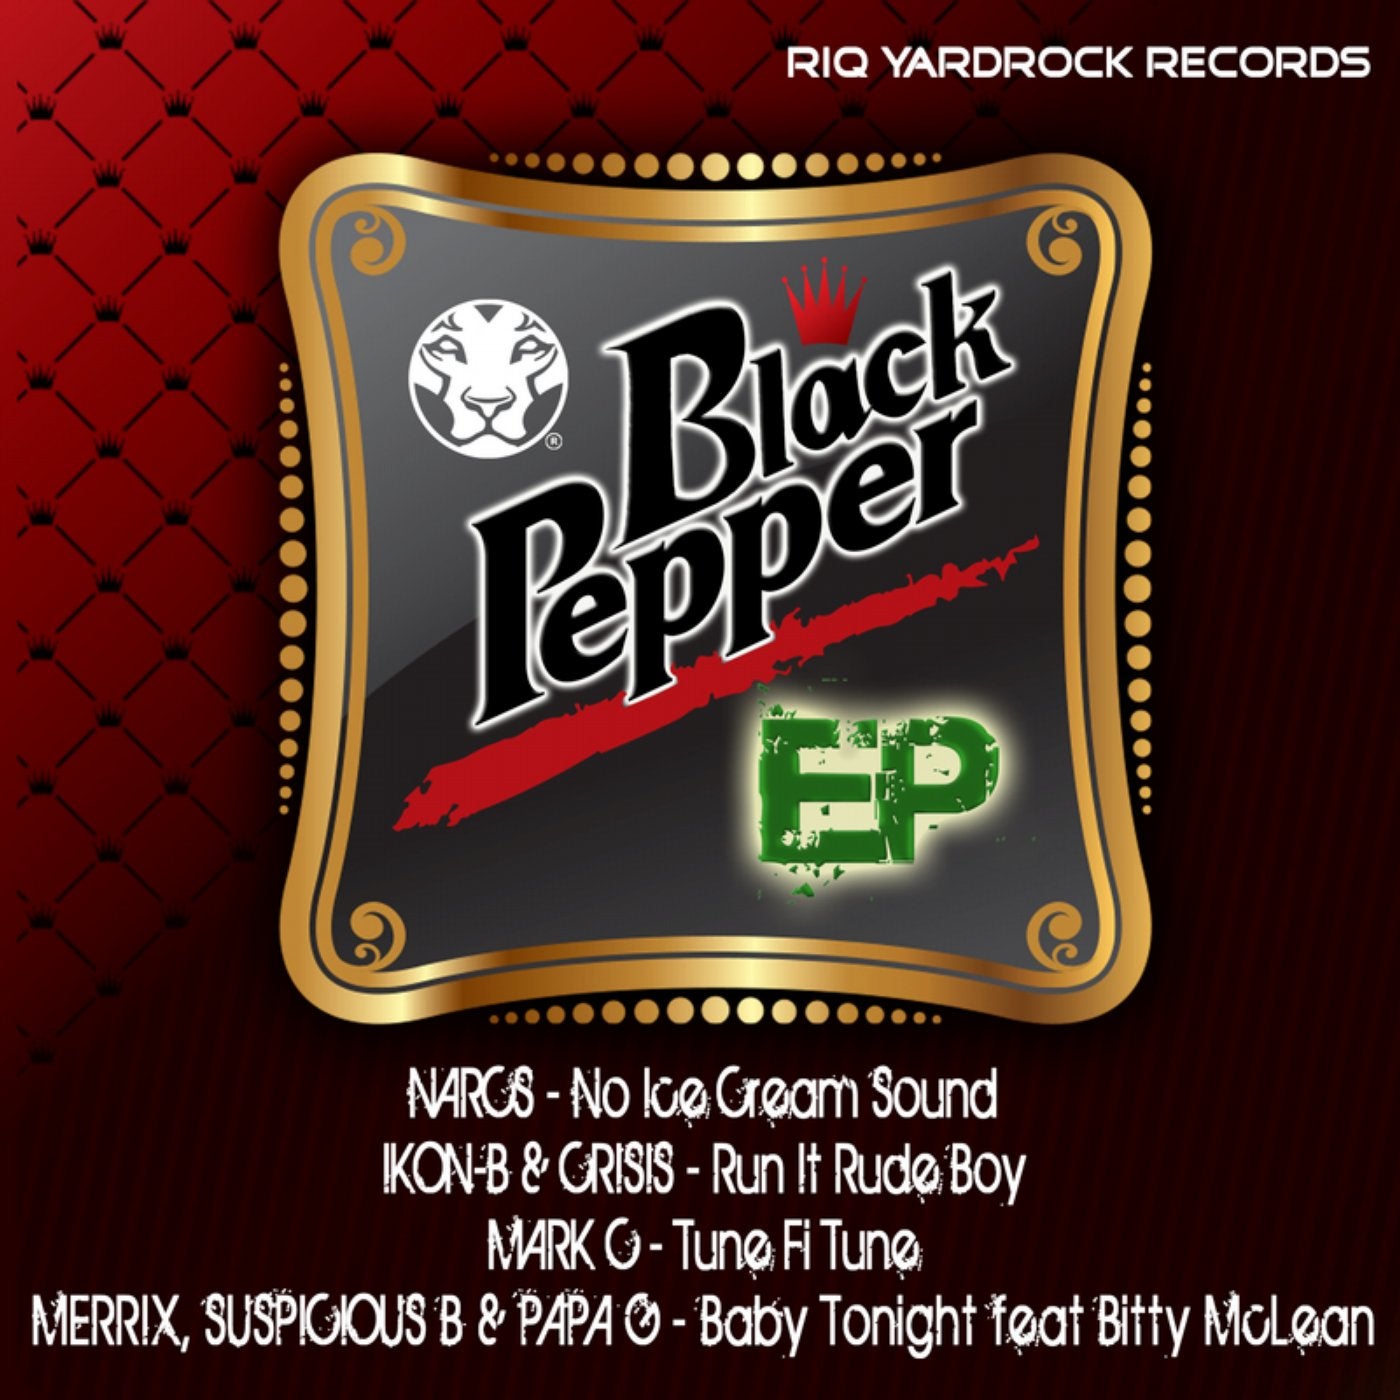 Yardrock Presents - Black Pepper